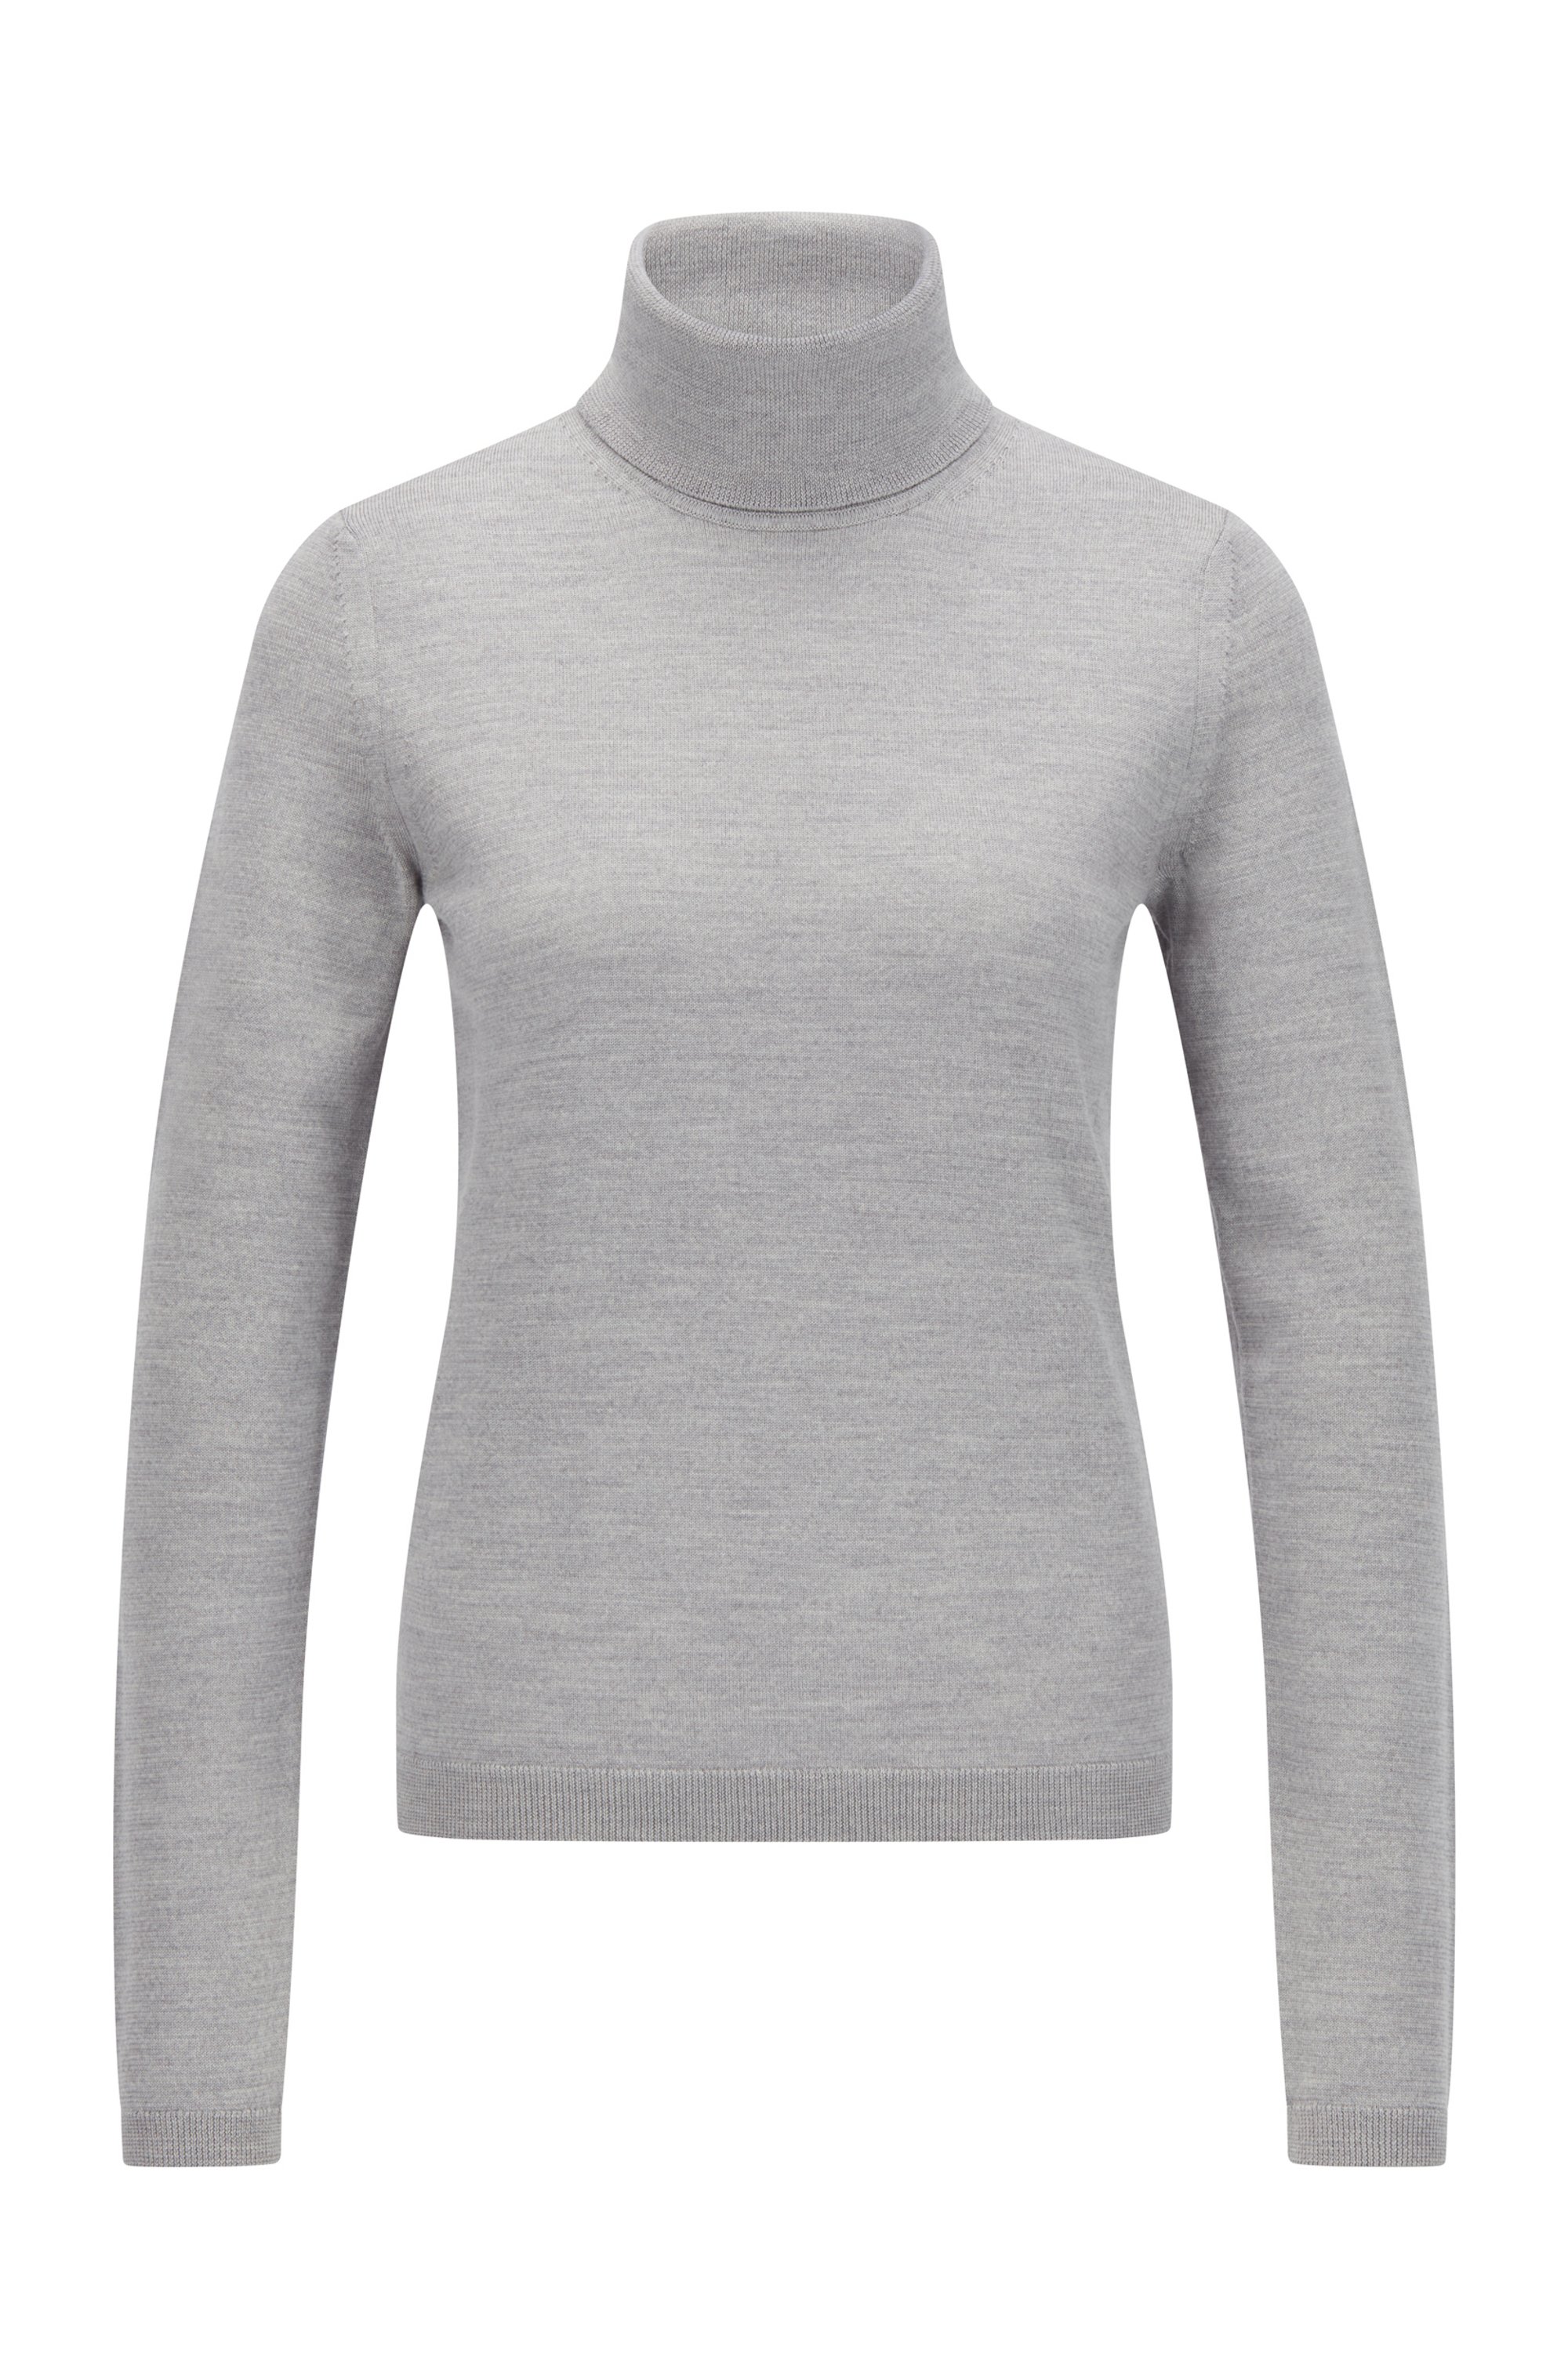 Slim-fit rollneck sweater in superfine merino wool, Silver